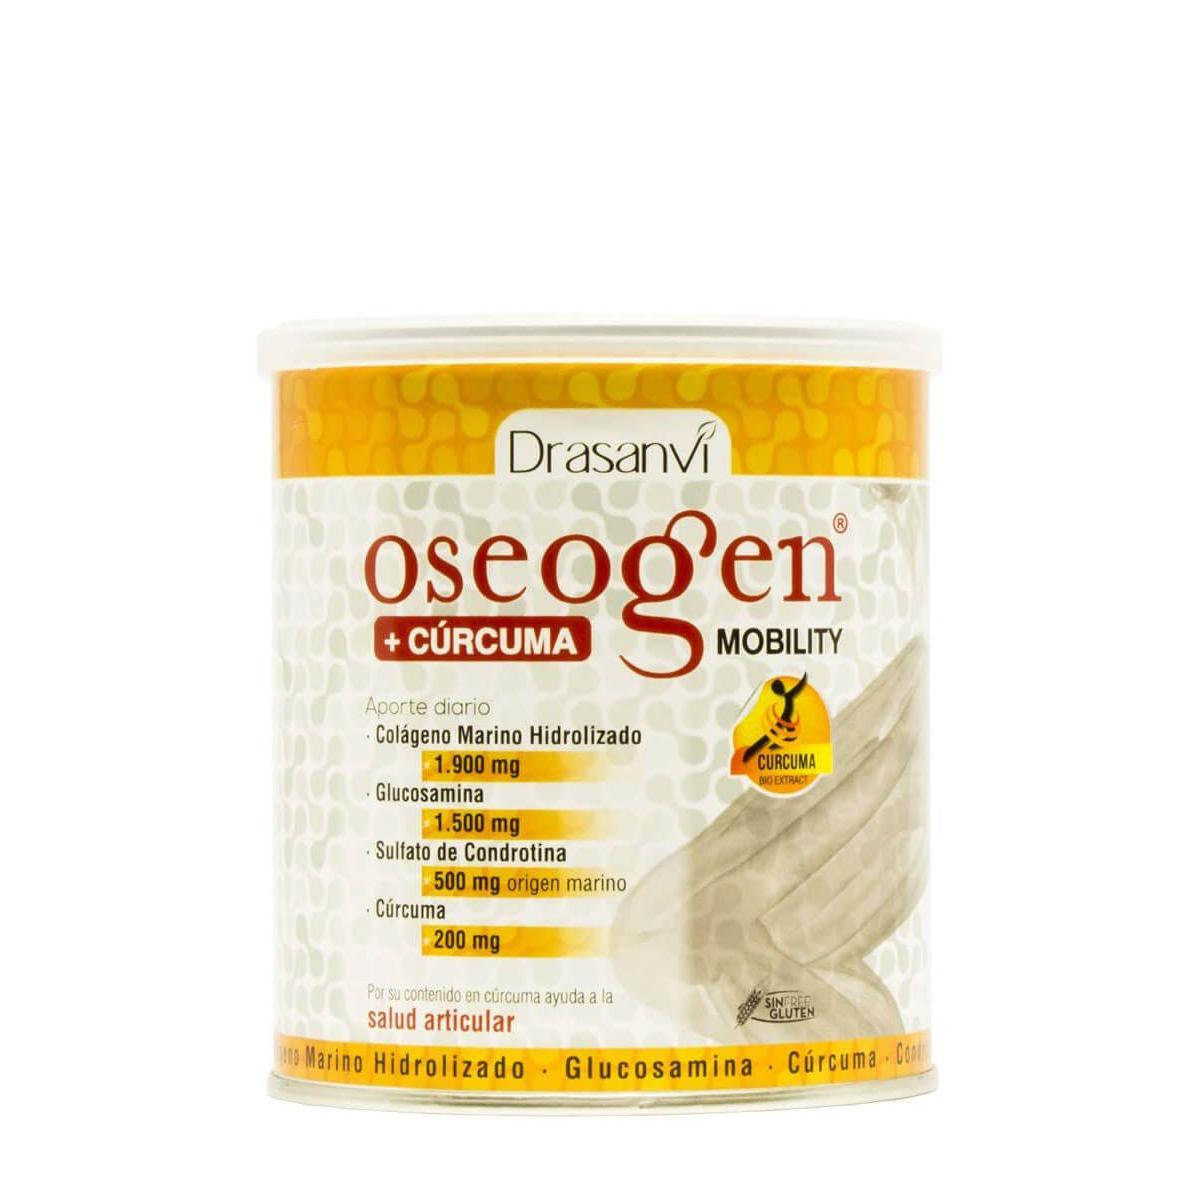 Drasanvi - Oseogen mobility + cúrcuma sabor naranja 300 gr